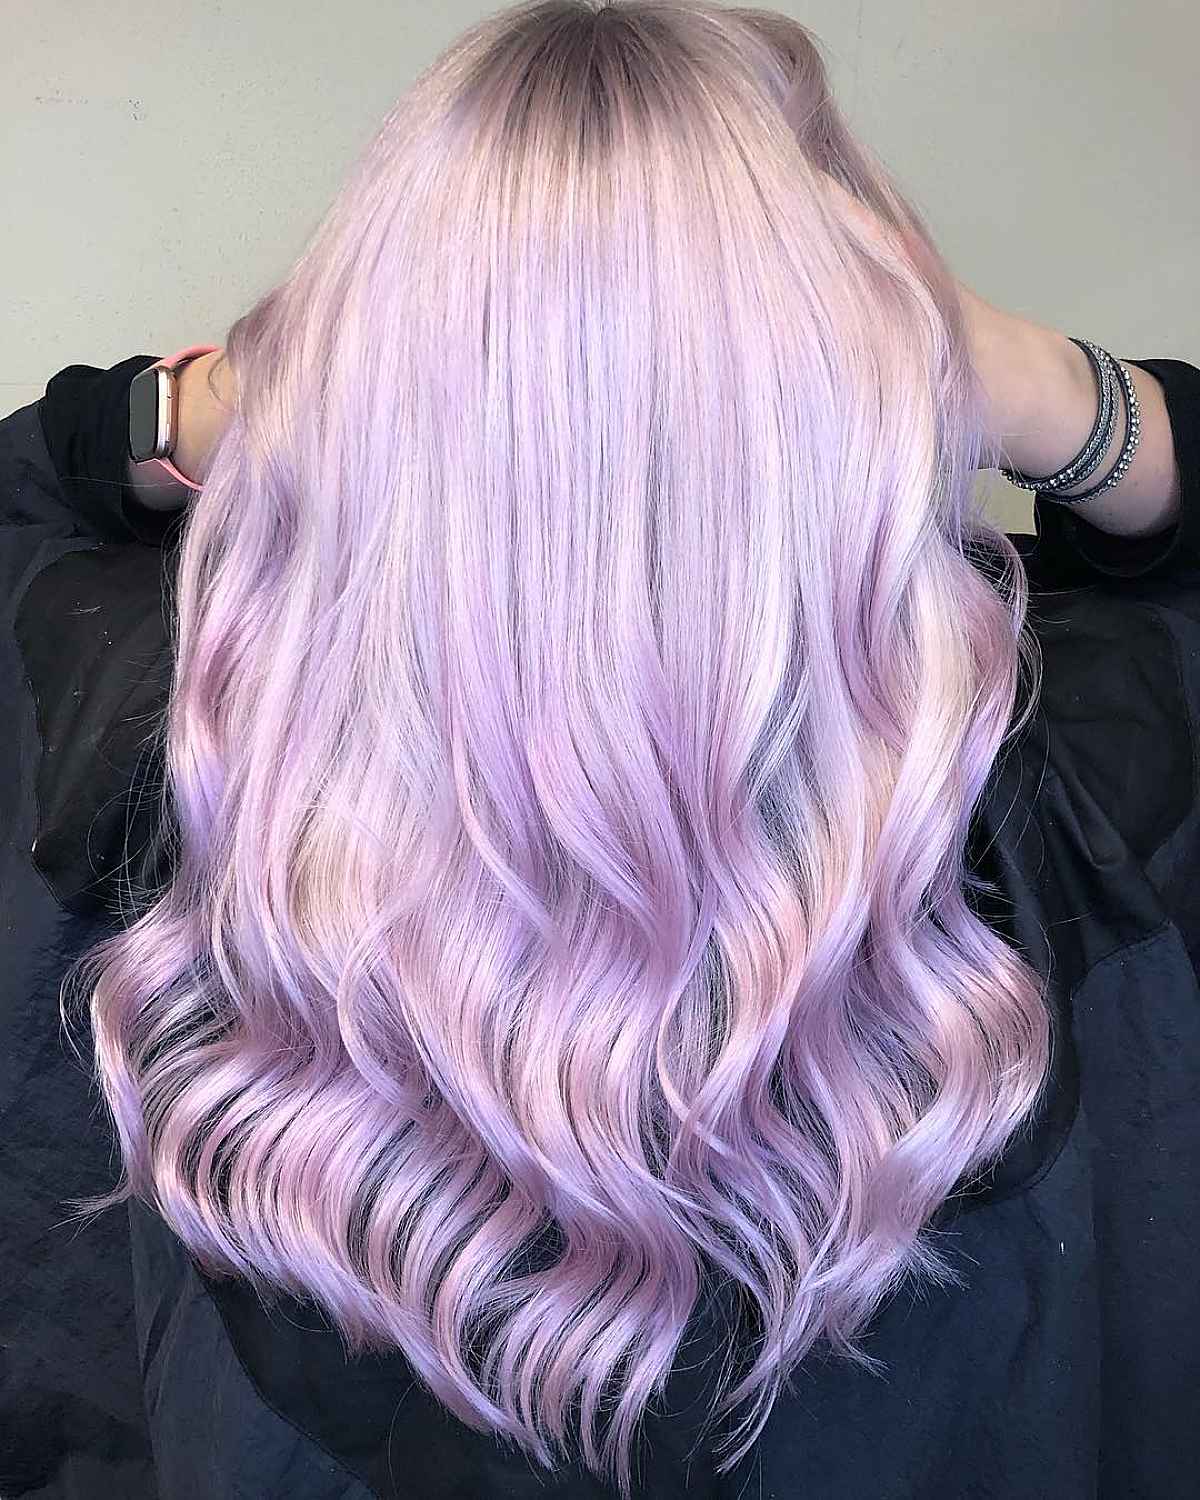 Silver hair with purple streaks